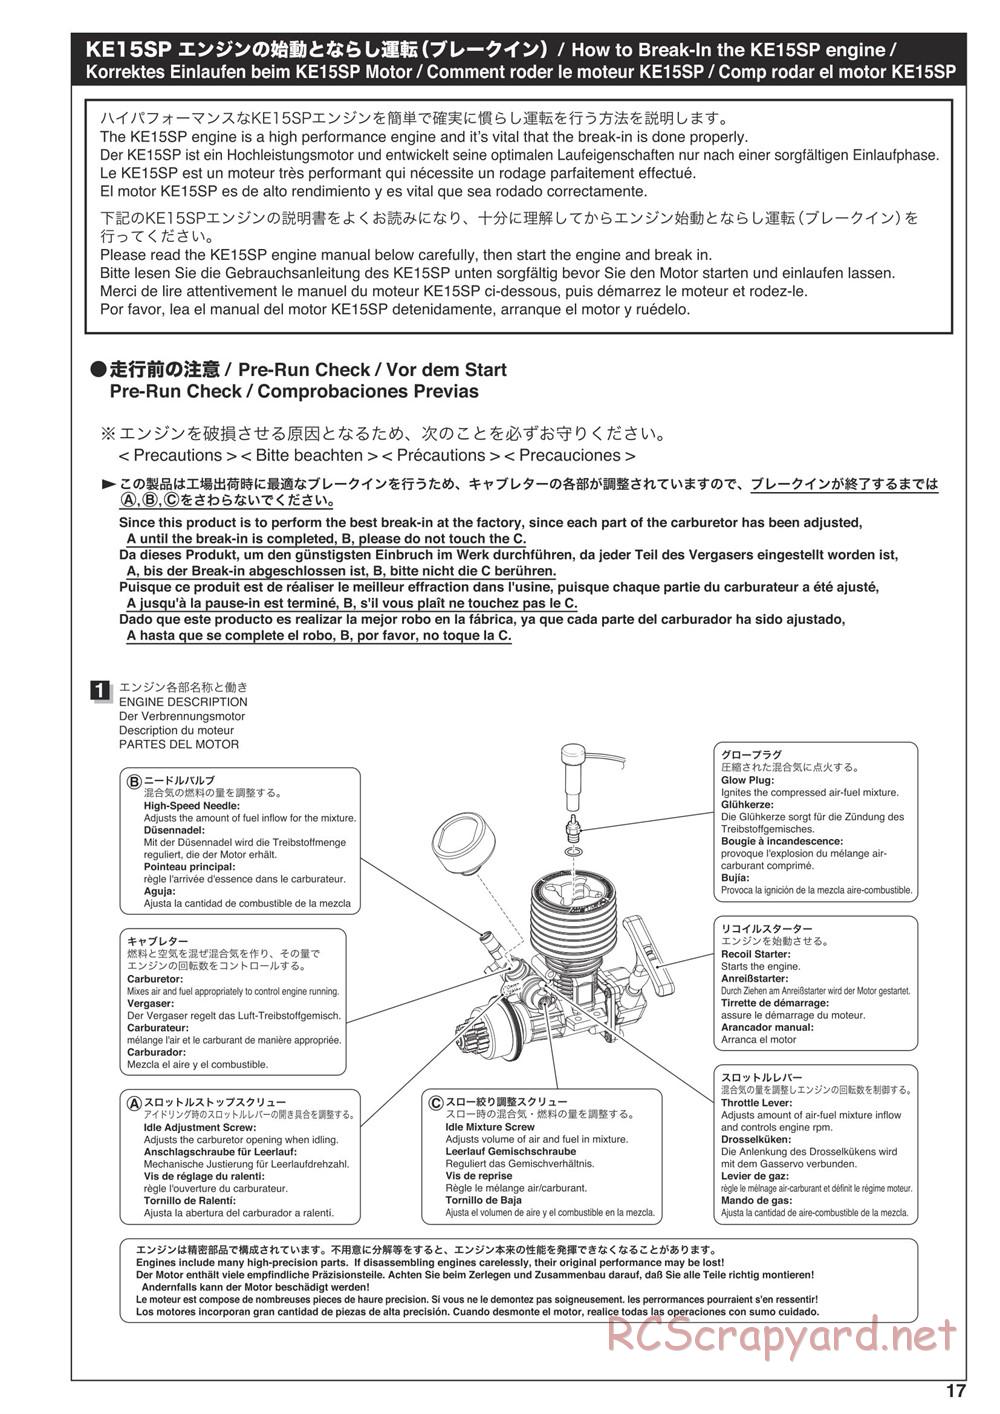 Kyosho - Nitro Tracker (2019) - Manual - Page 17